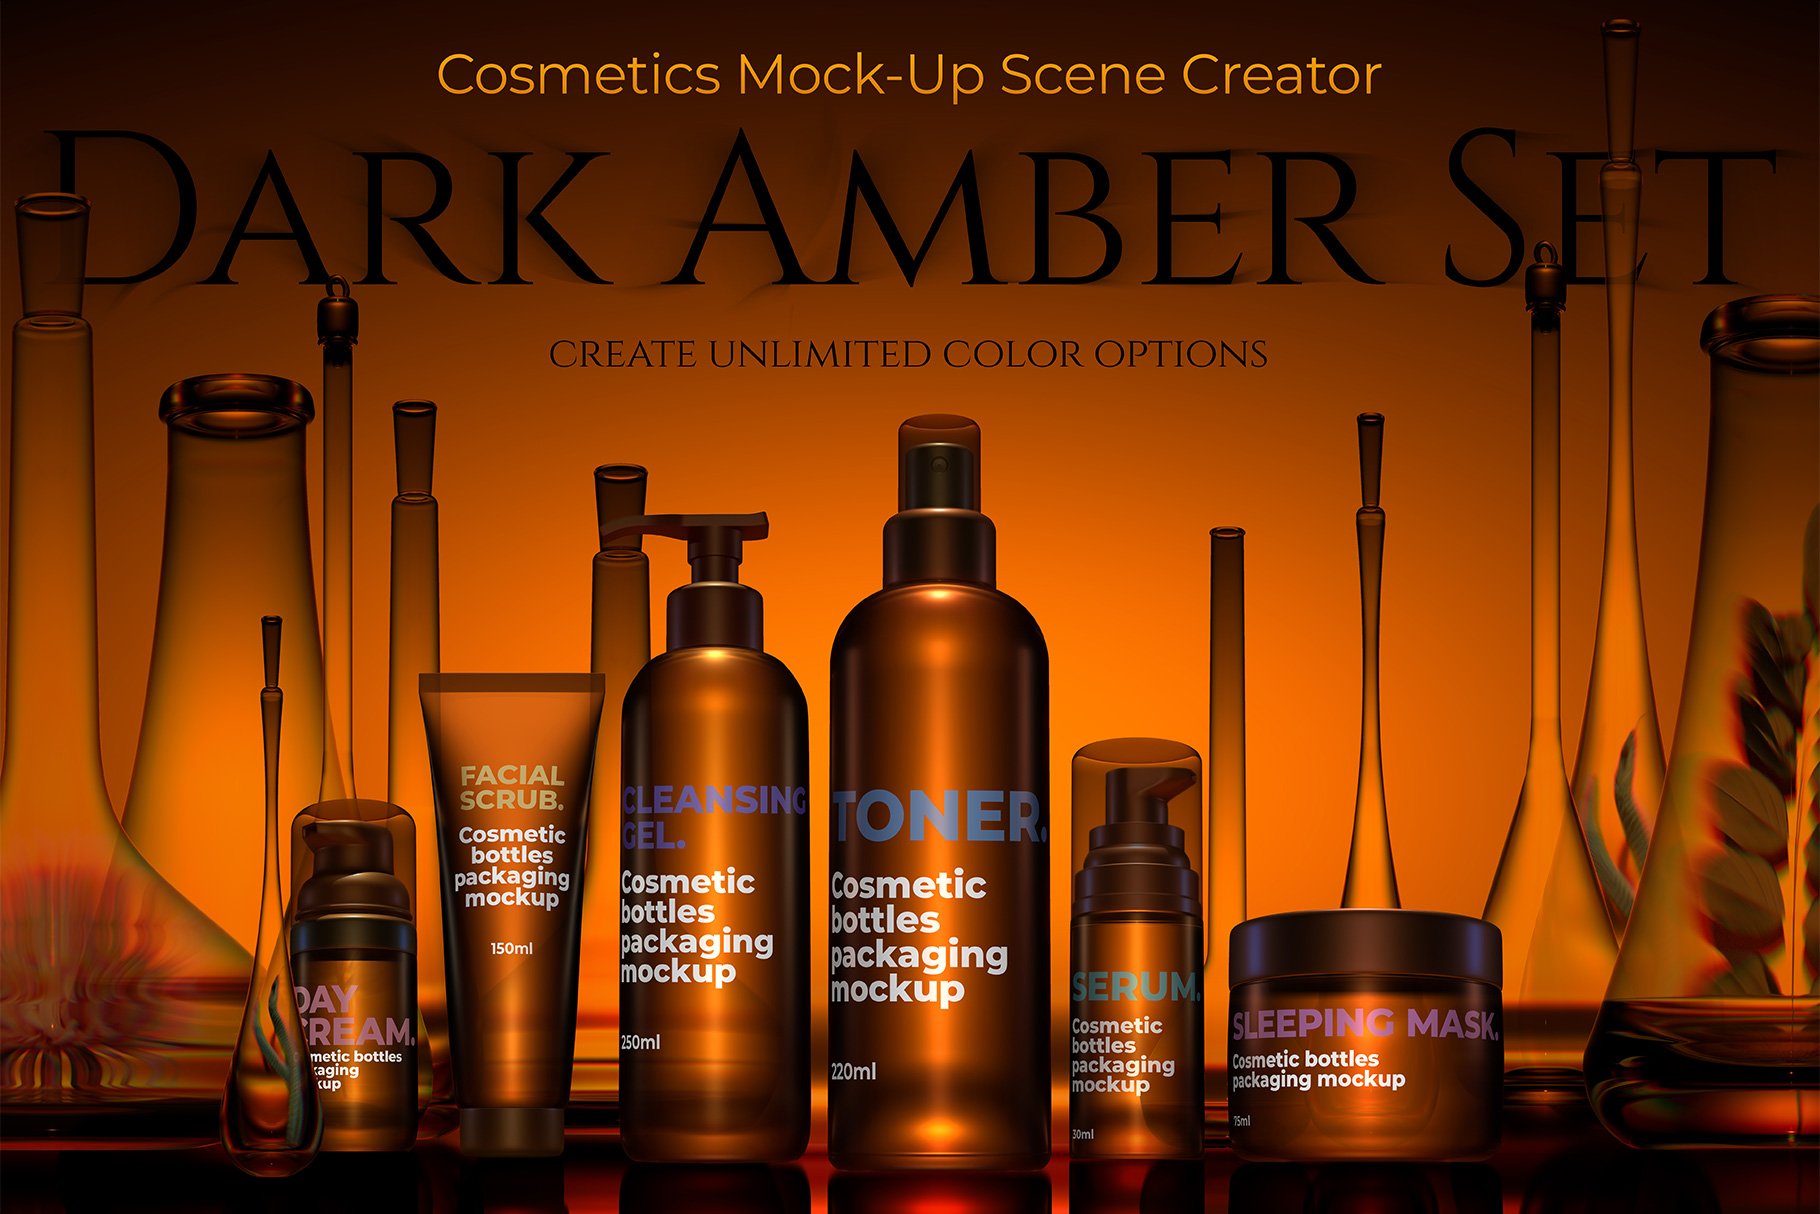 Dark Amber Cosmetics Scene Creator cover image.